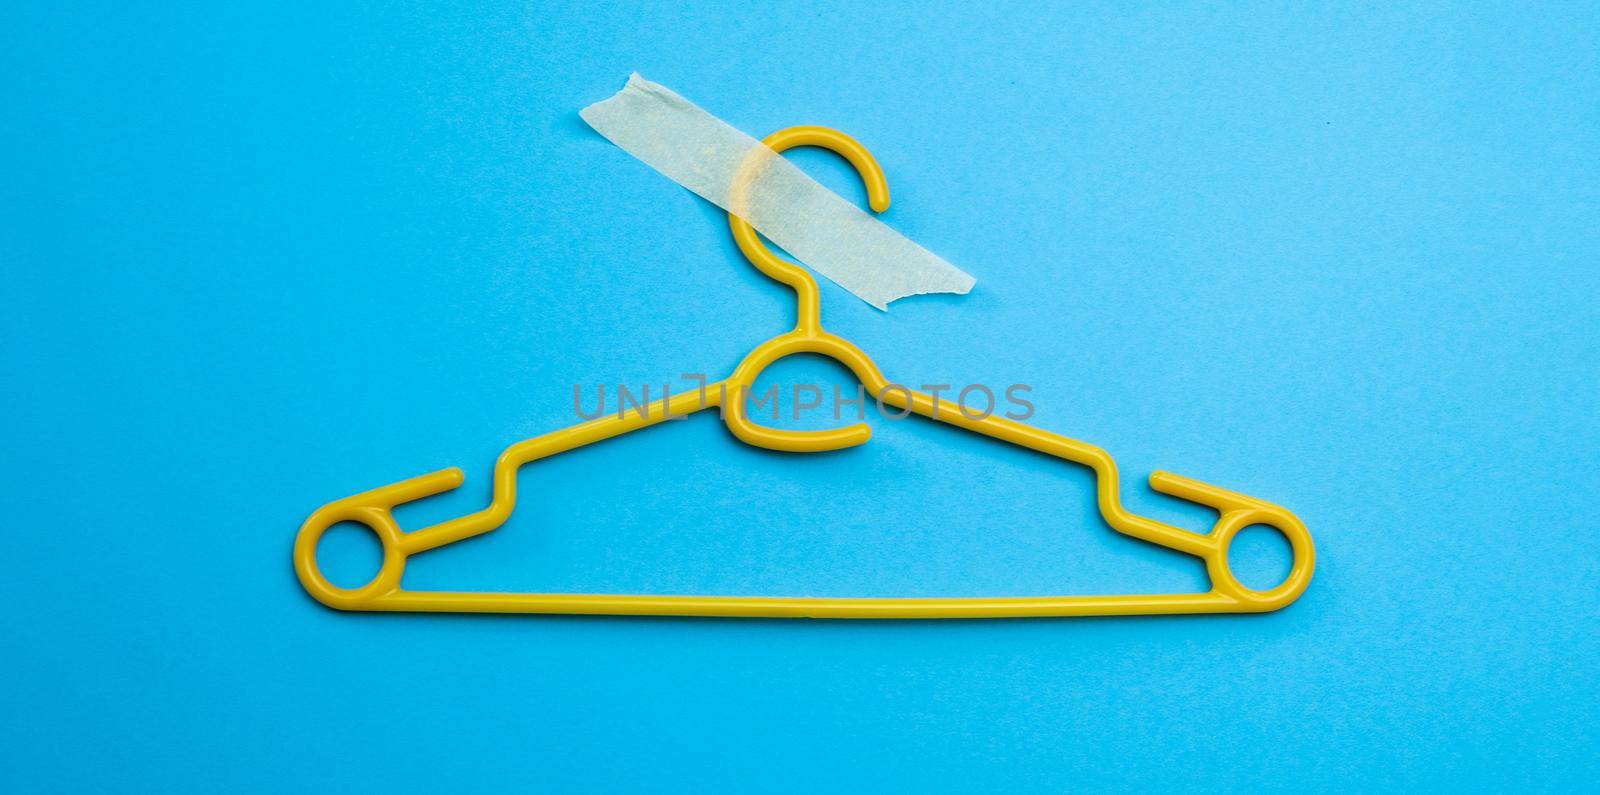 Hanger with masking tape by GekaSkr